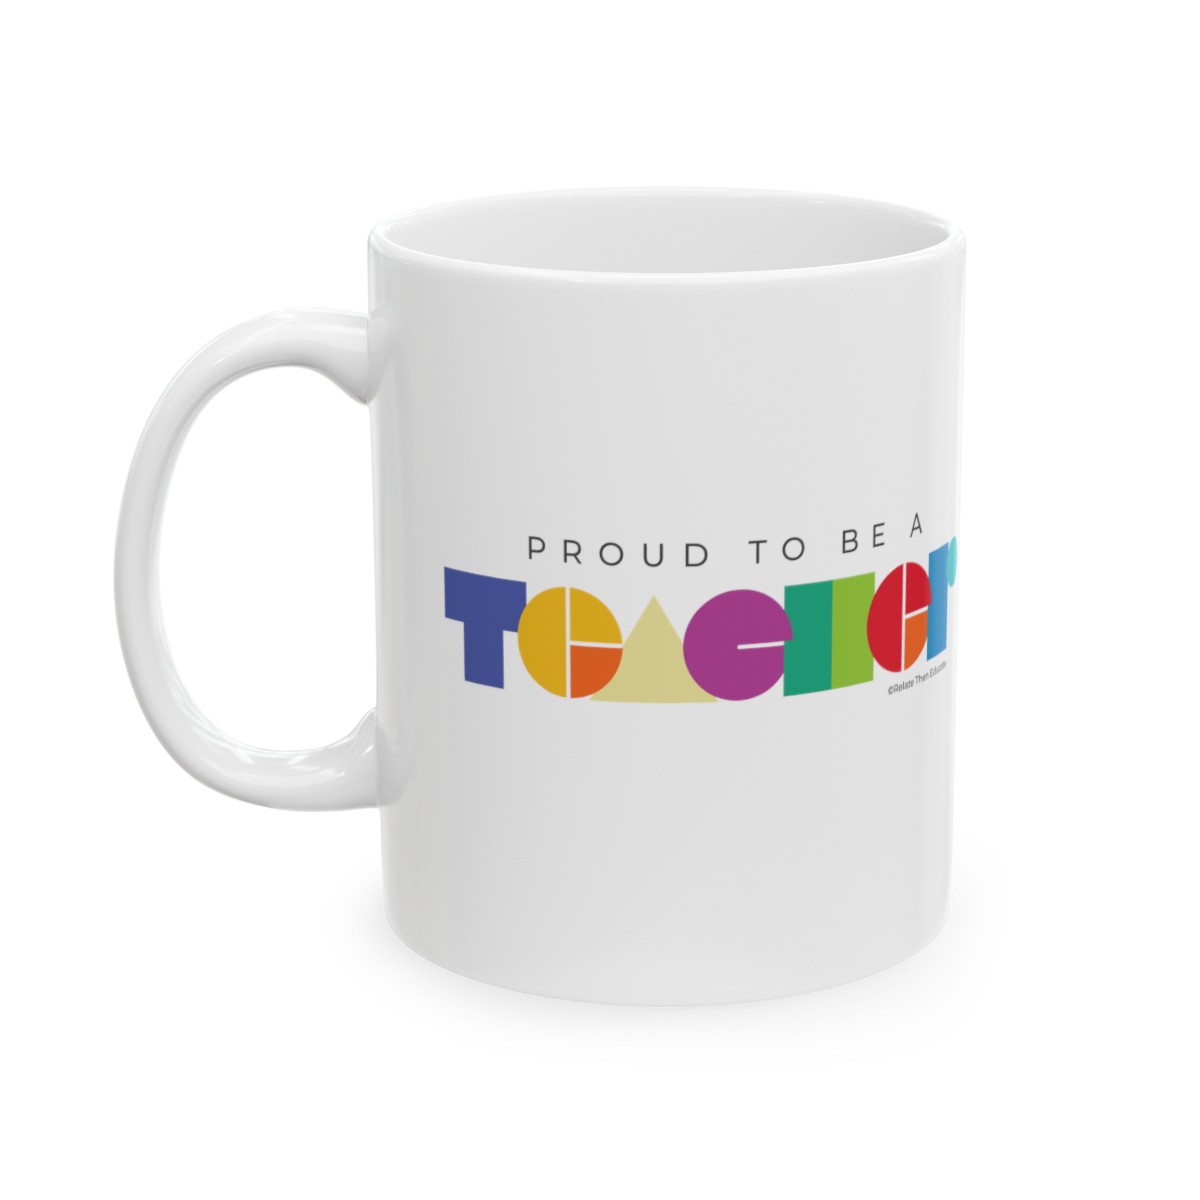 Proud to be a Teacher - 11oz White Mug for Teachers product thumbnail image